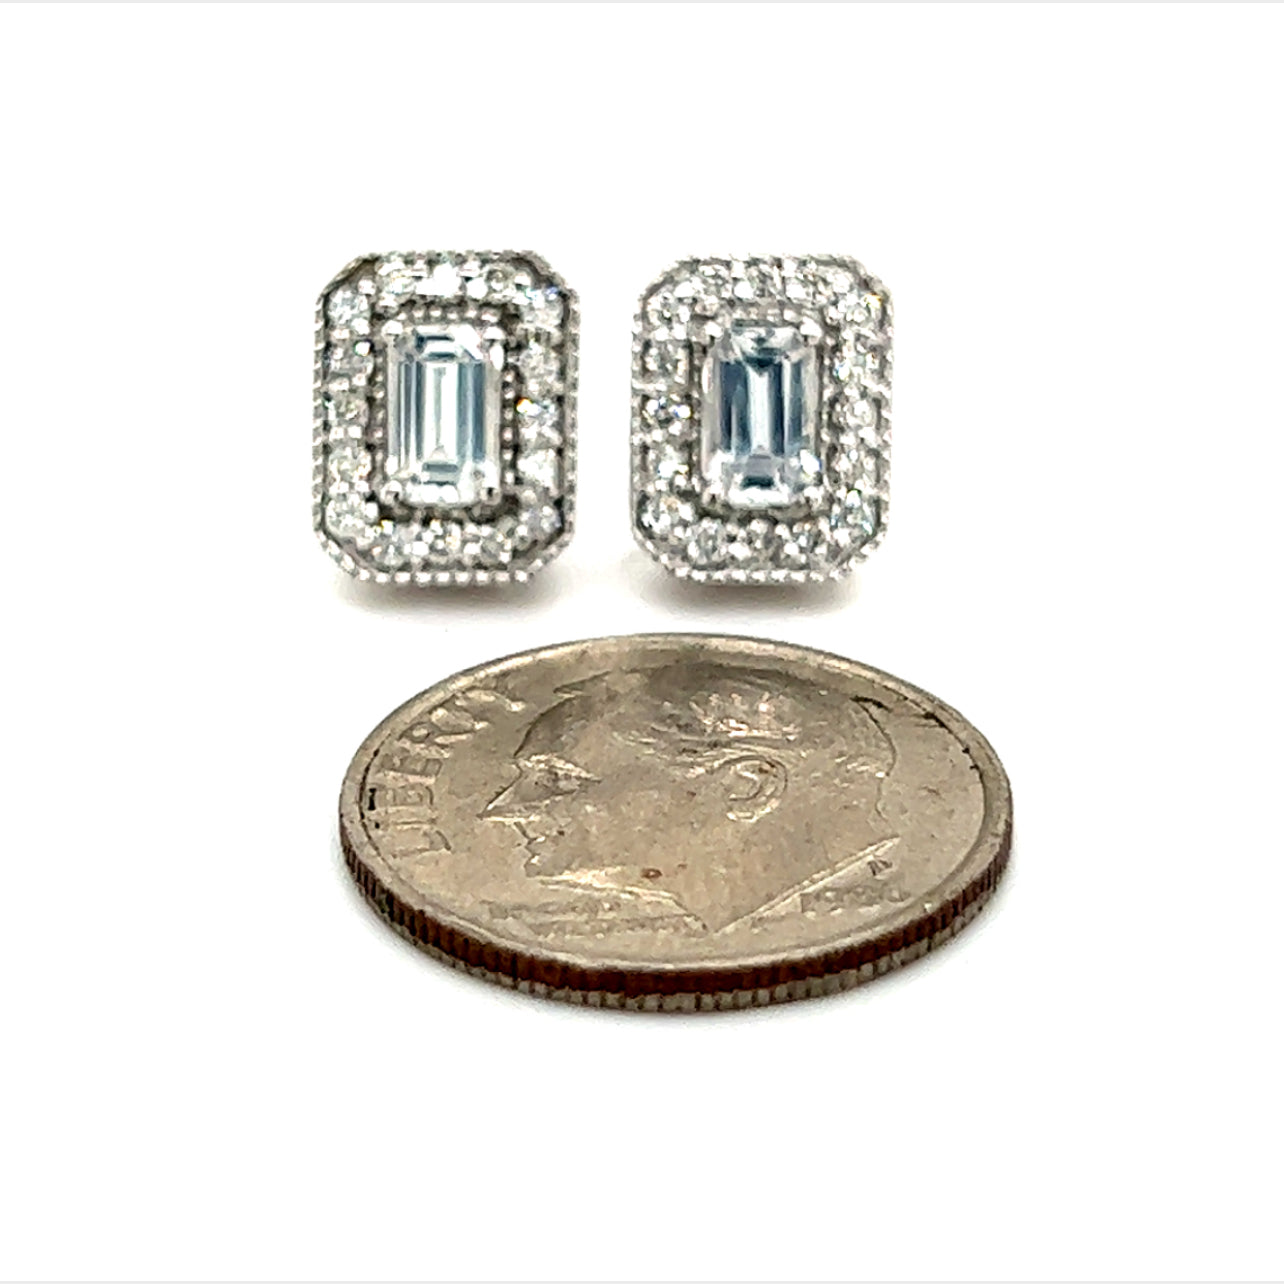 Natural Sapphire Diamond Stud Earrings 14k W Gold 0.96 TCW Certified $2950 121269 - Certified Estate Jewelry